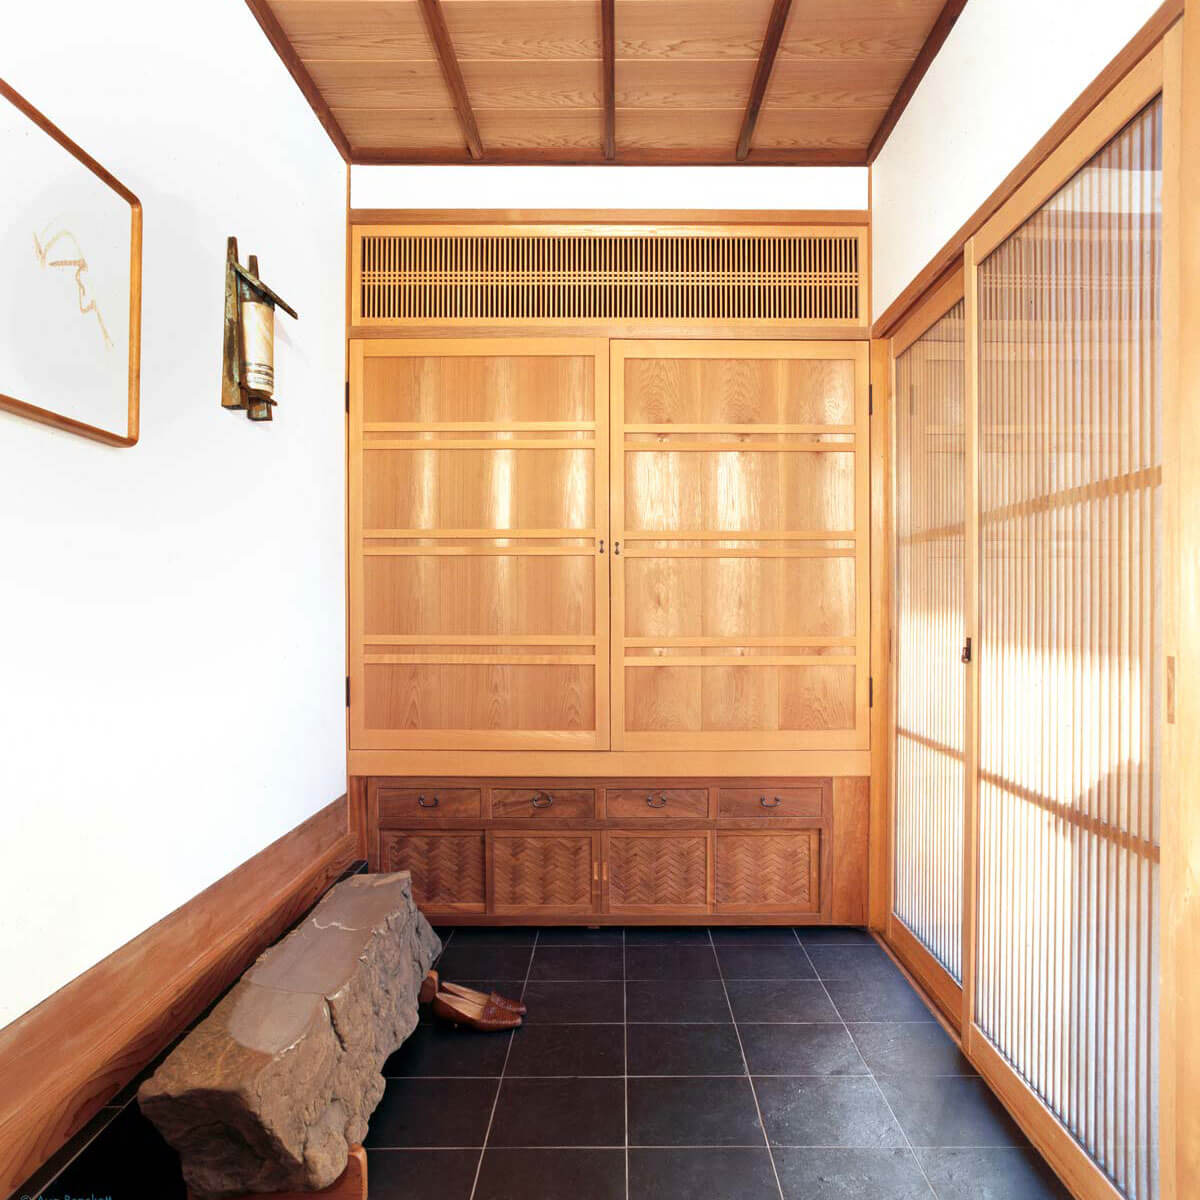 Minimalist Rustic Bathroom with Japanese Theme | HomeMydesign